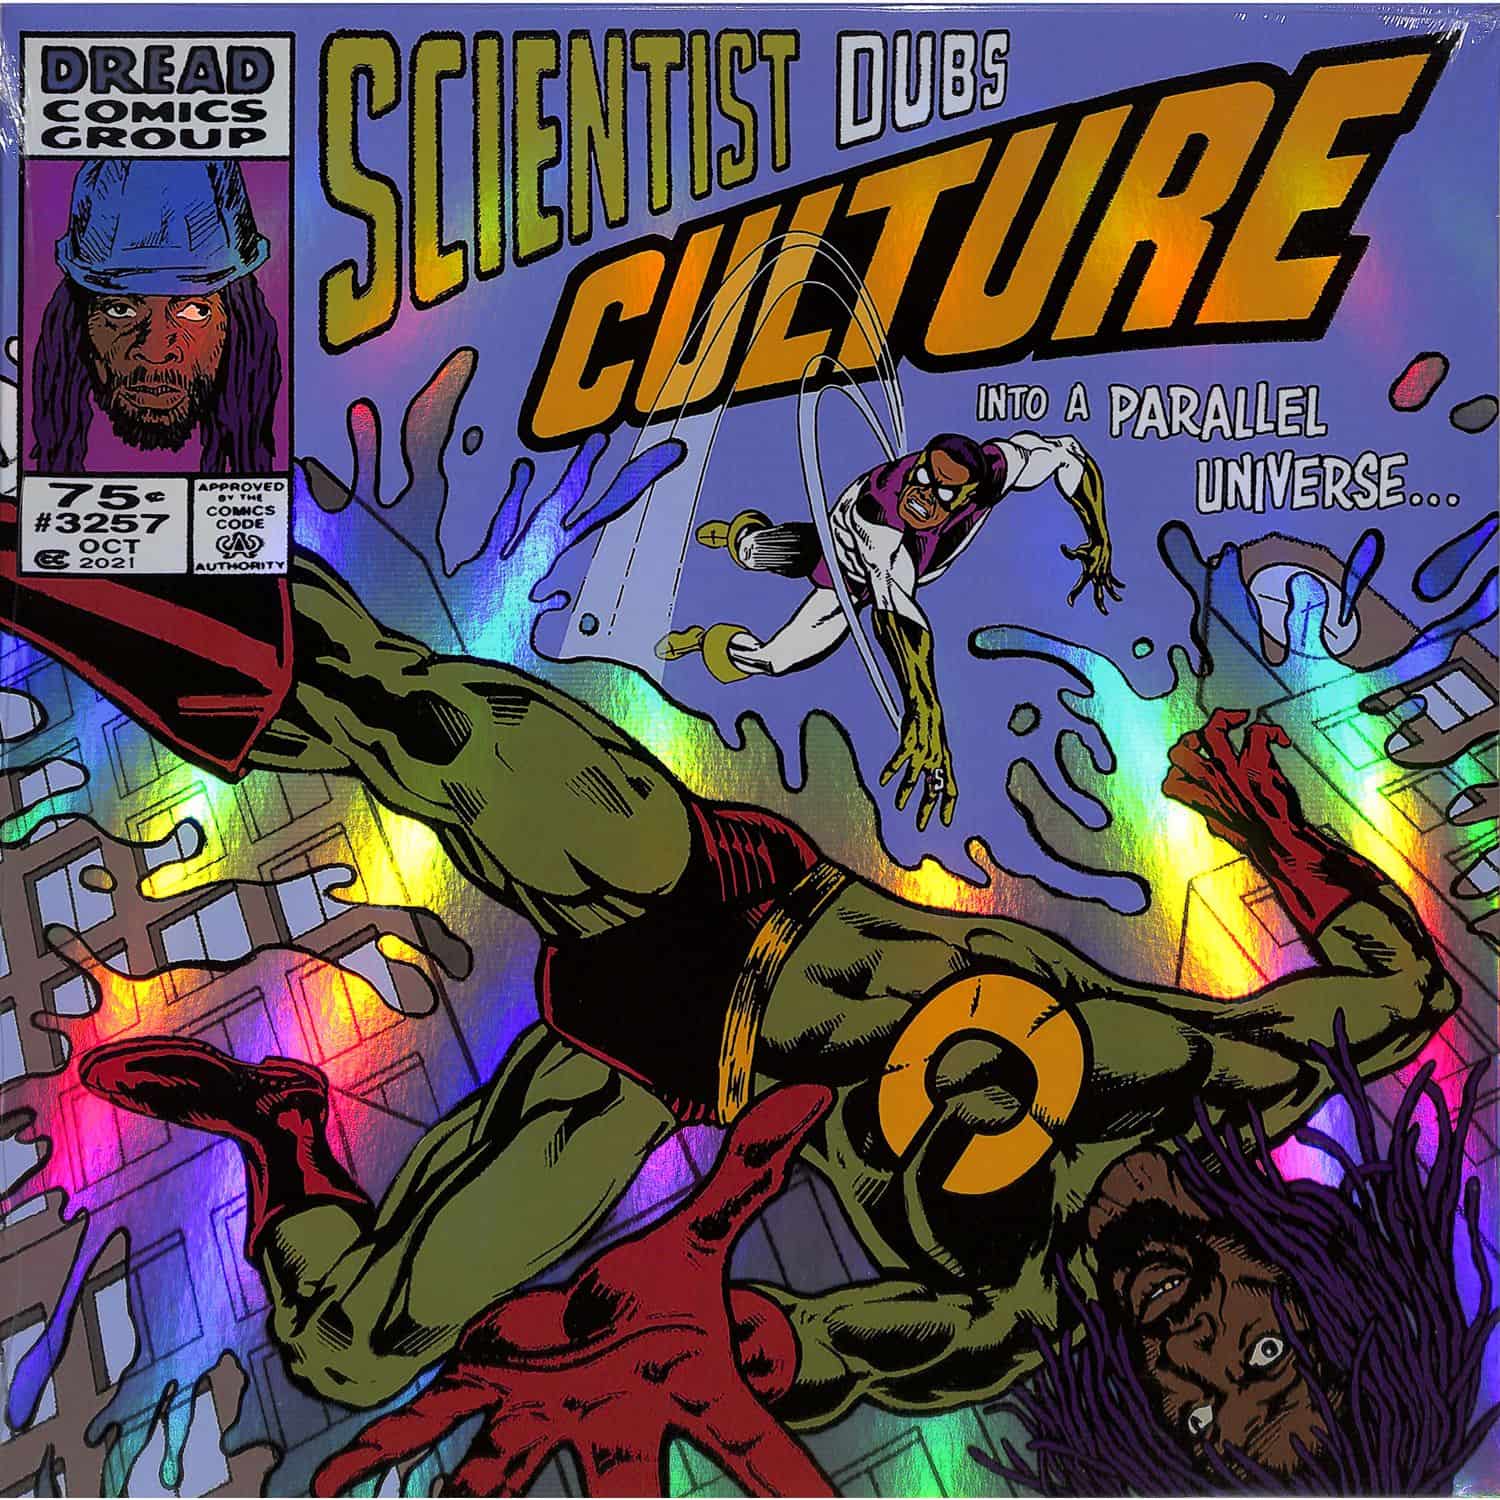 Scientist Dubs Culture - INTO A PARALLEL UNIVERSE 